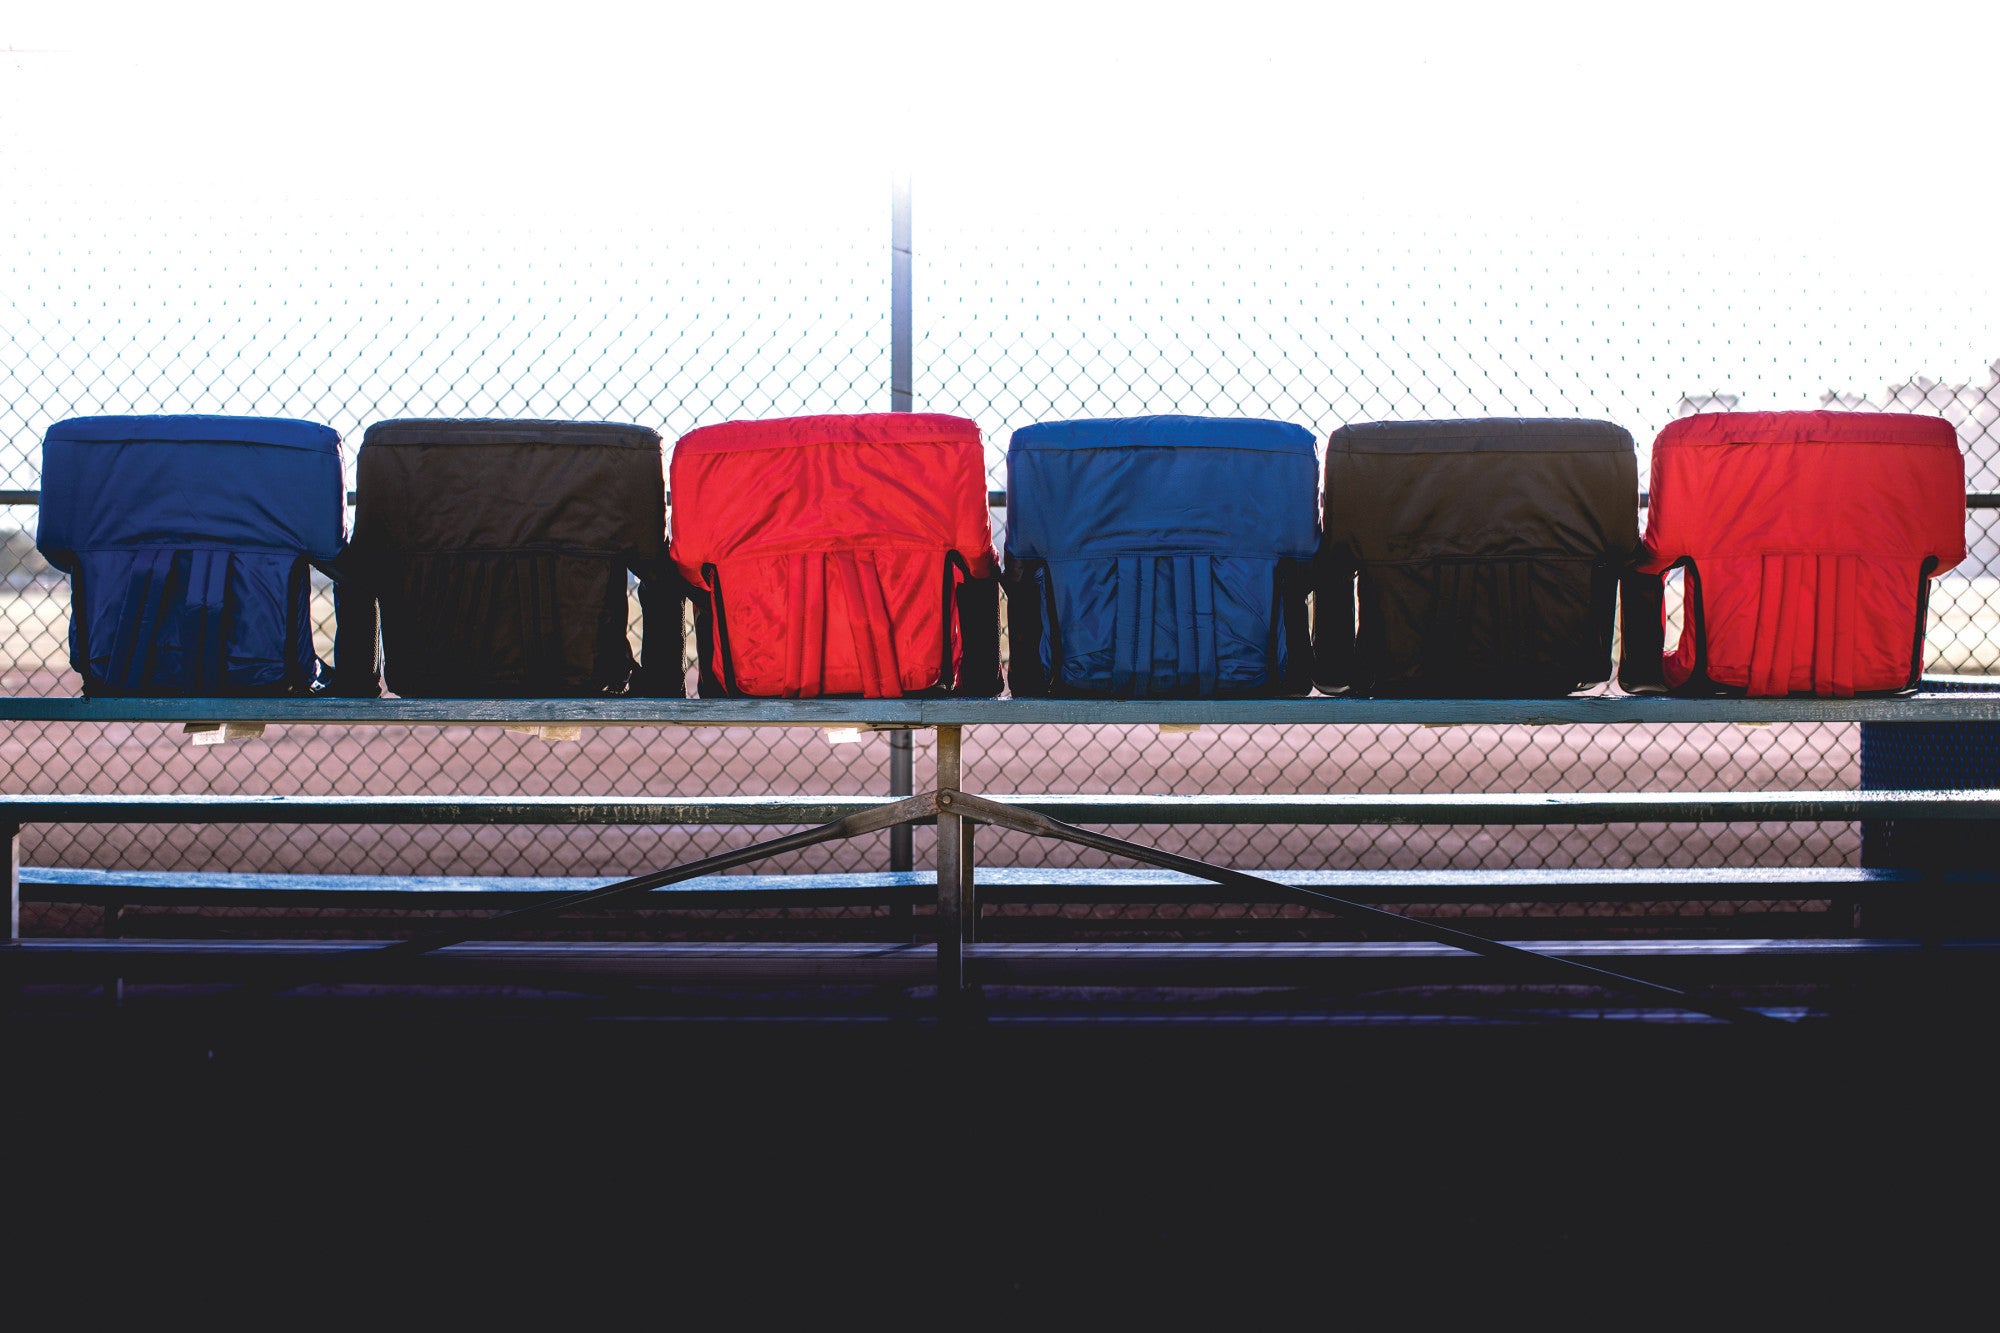 Louisville Cardinals - Ventura Portable Reclining Stadium Seat